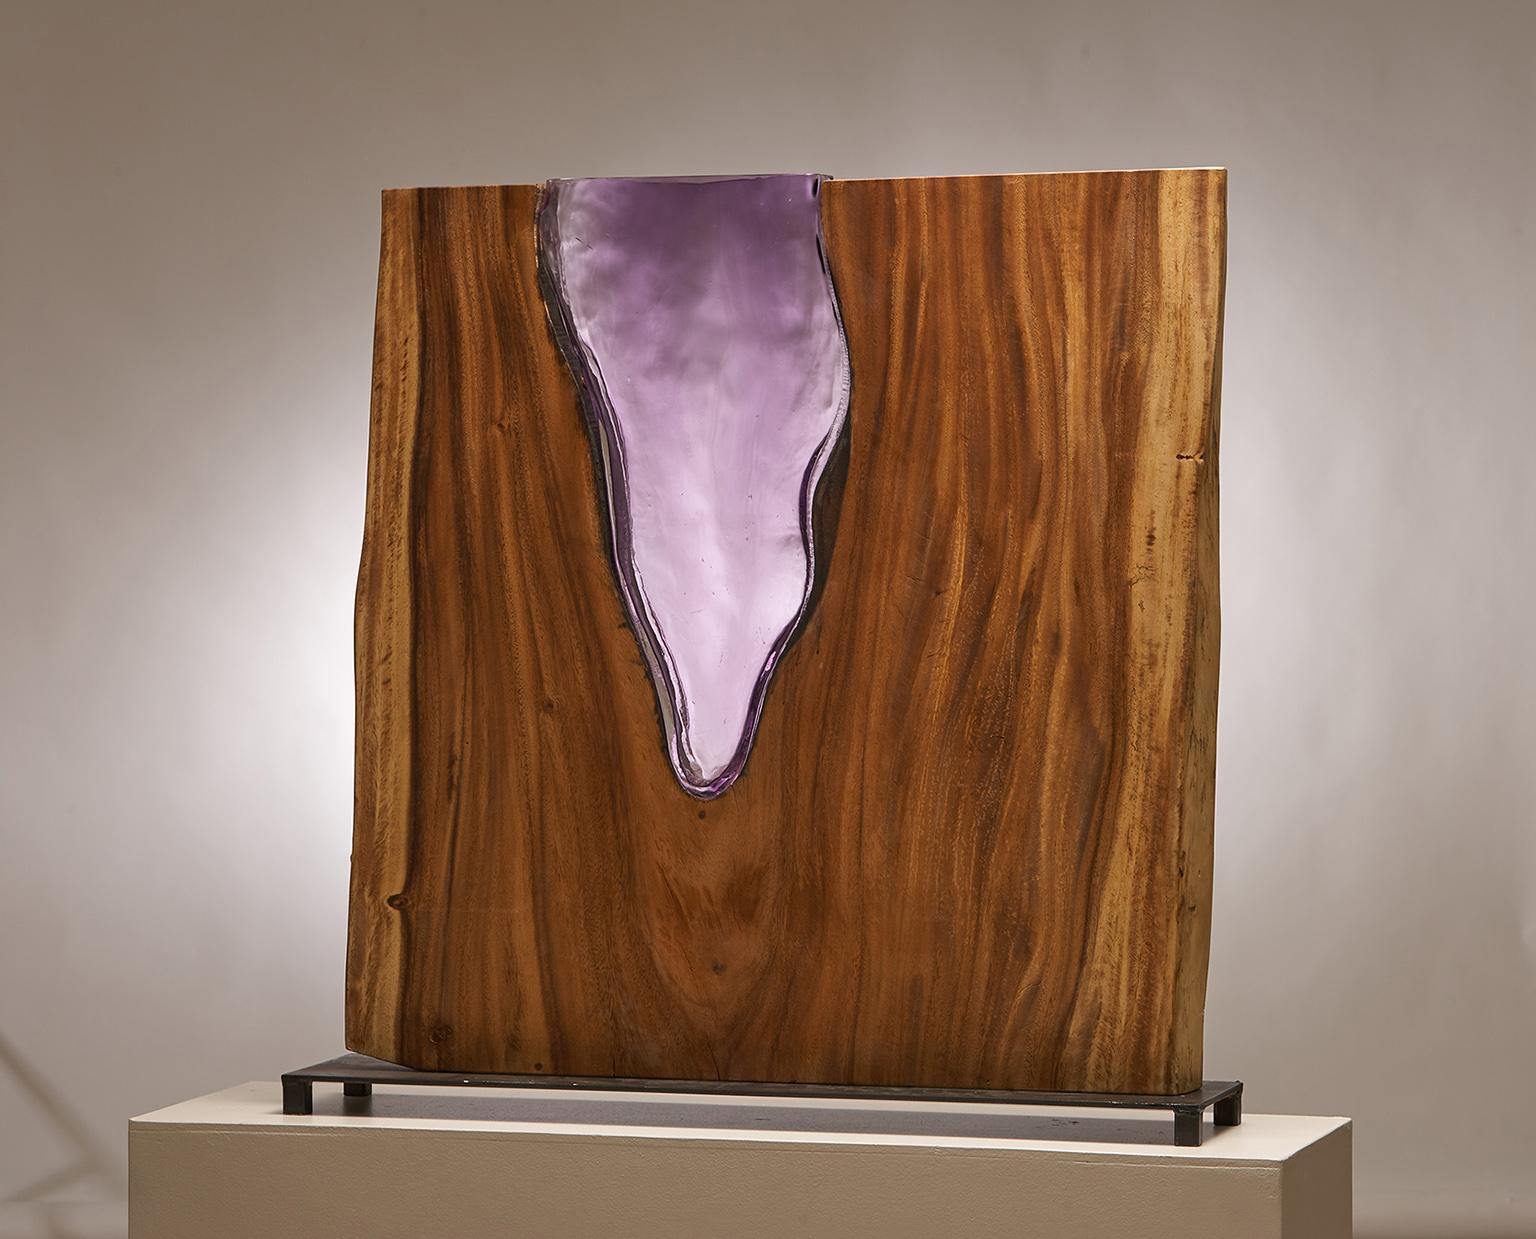 Hand Blown Amethyst Glass with Live Edge Wood Vase Sculpture, Scott Slagerman - Mixed Media Art by Scott Slagerman / Jim Fishman